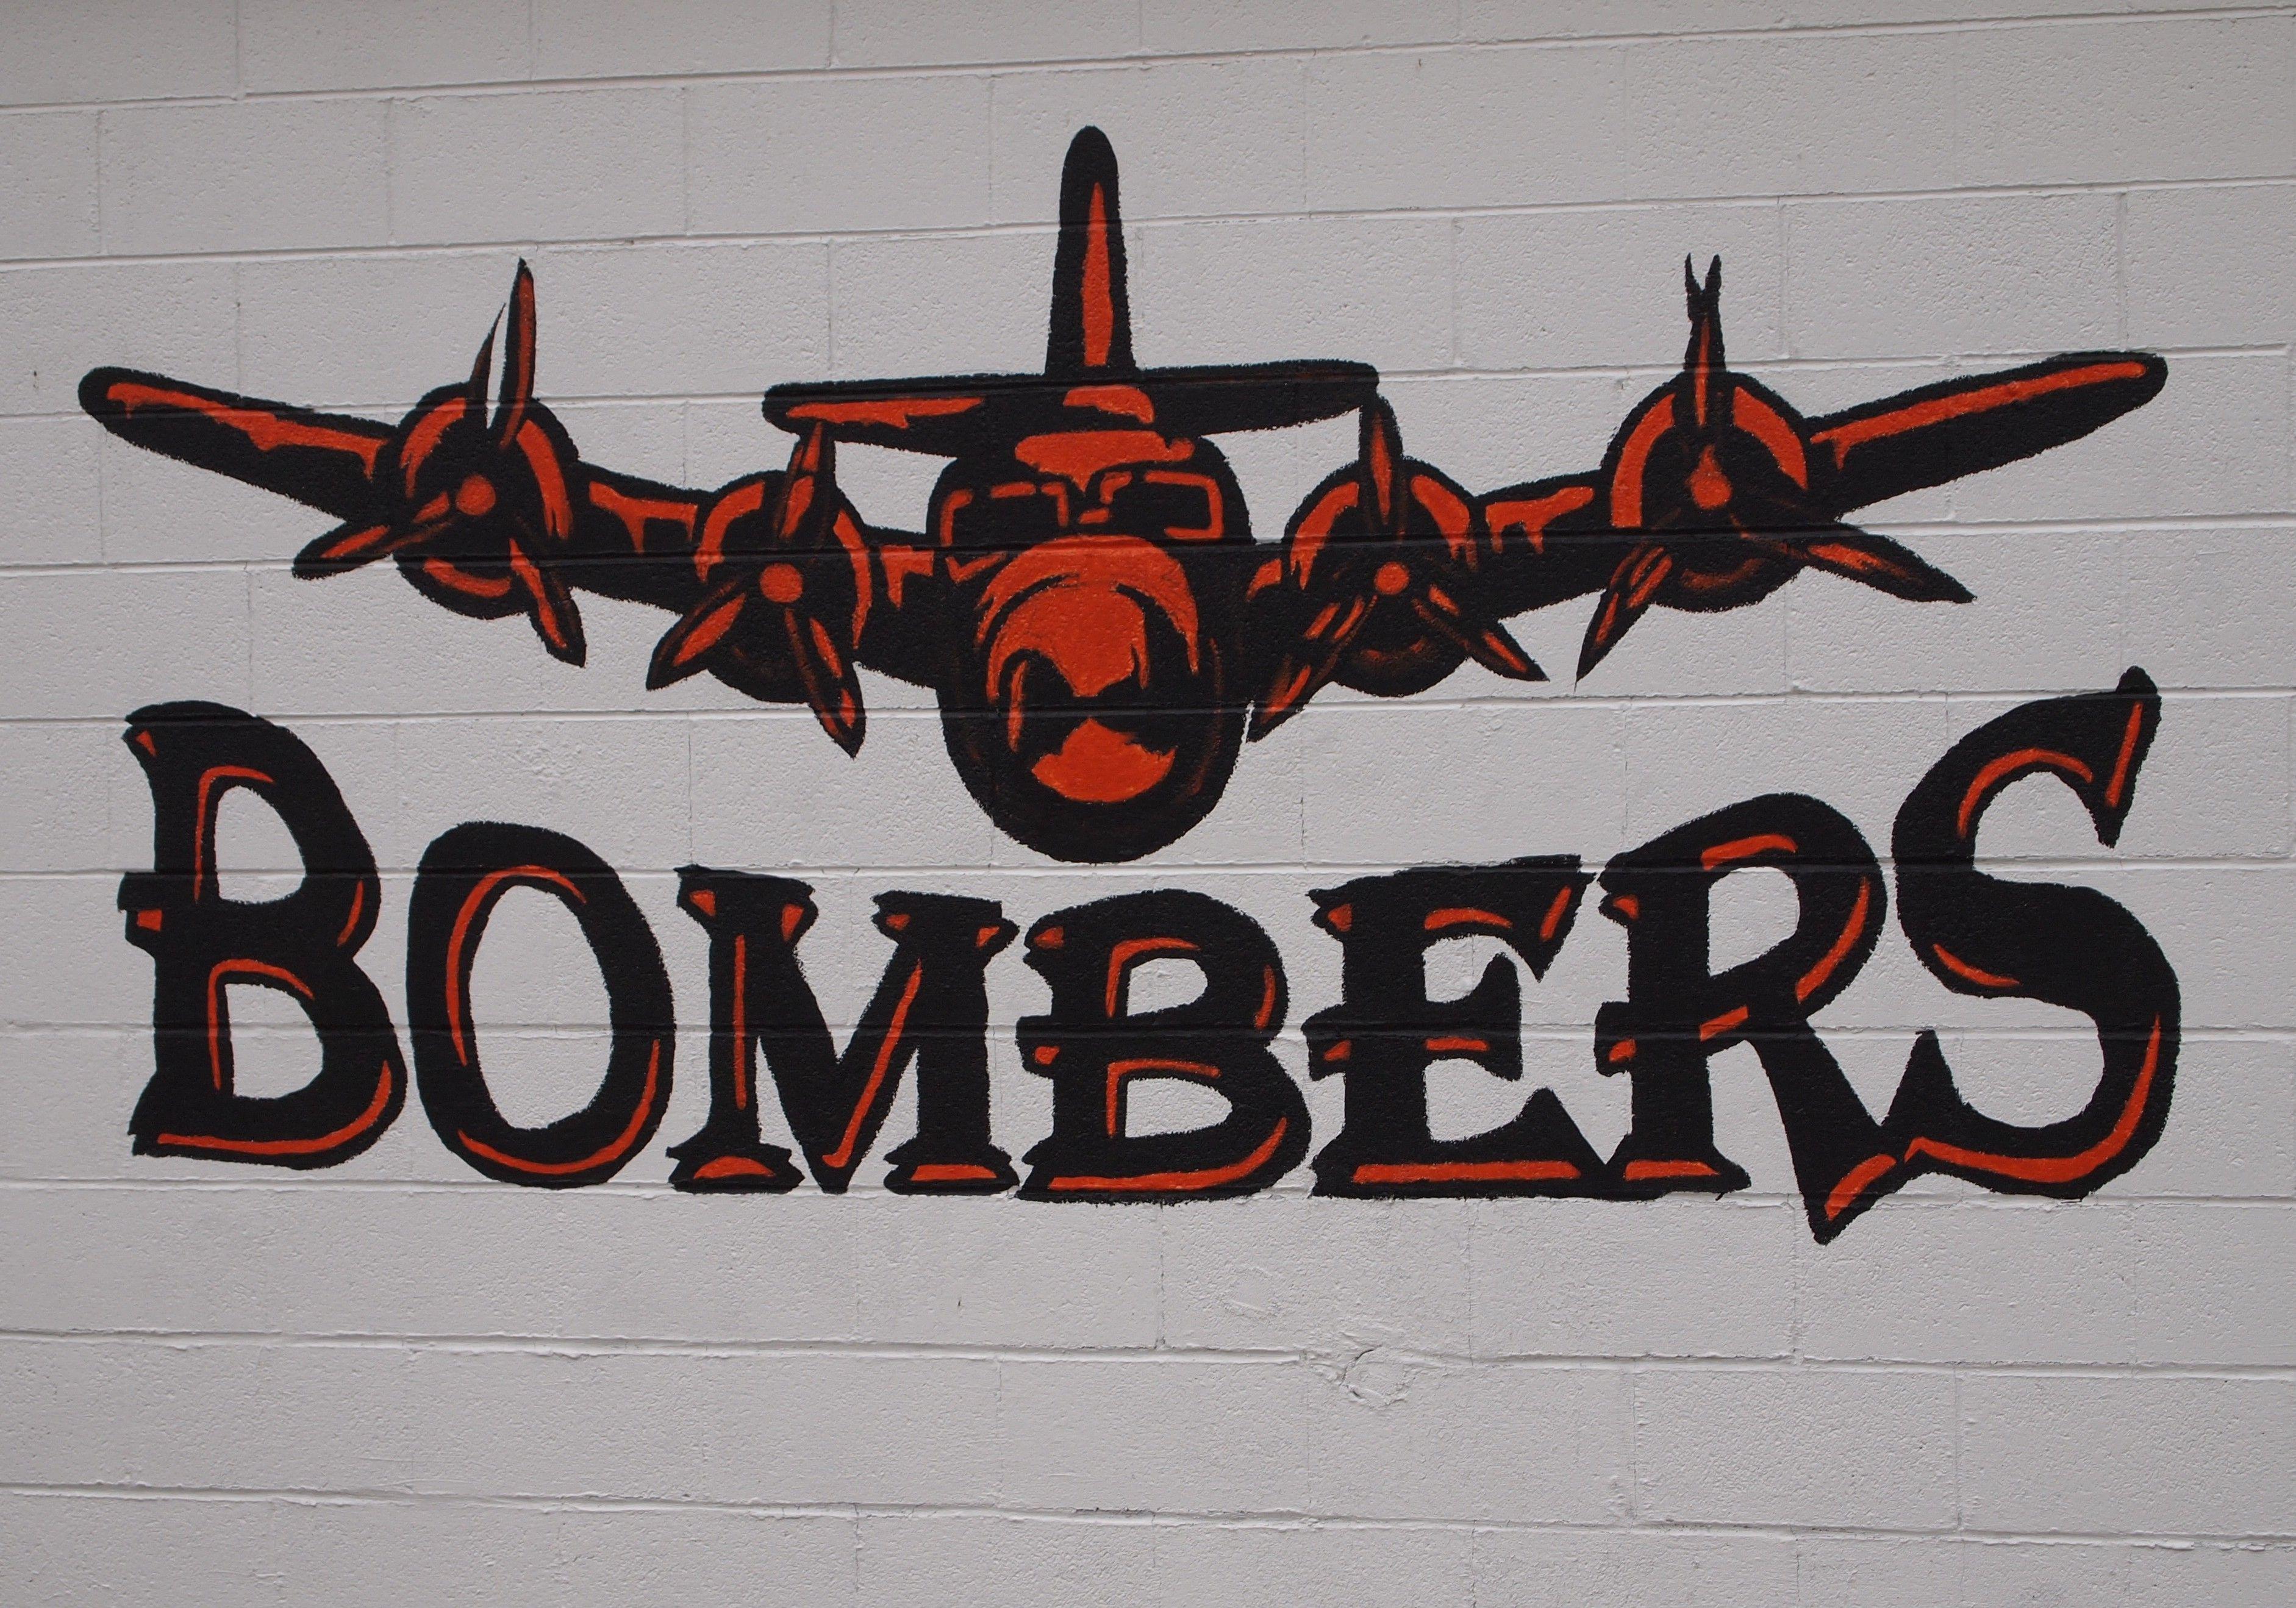 Bomber Logo - How I Feel about Bombers. Tri States Public Radio